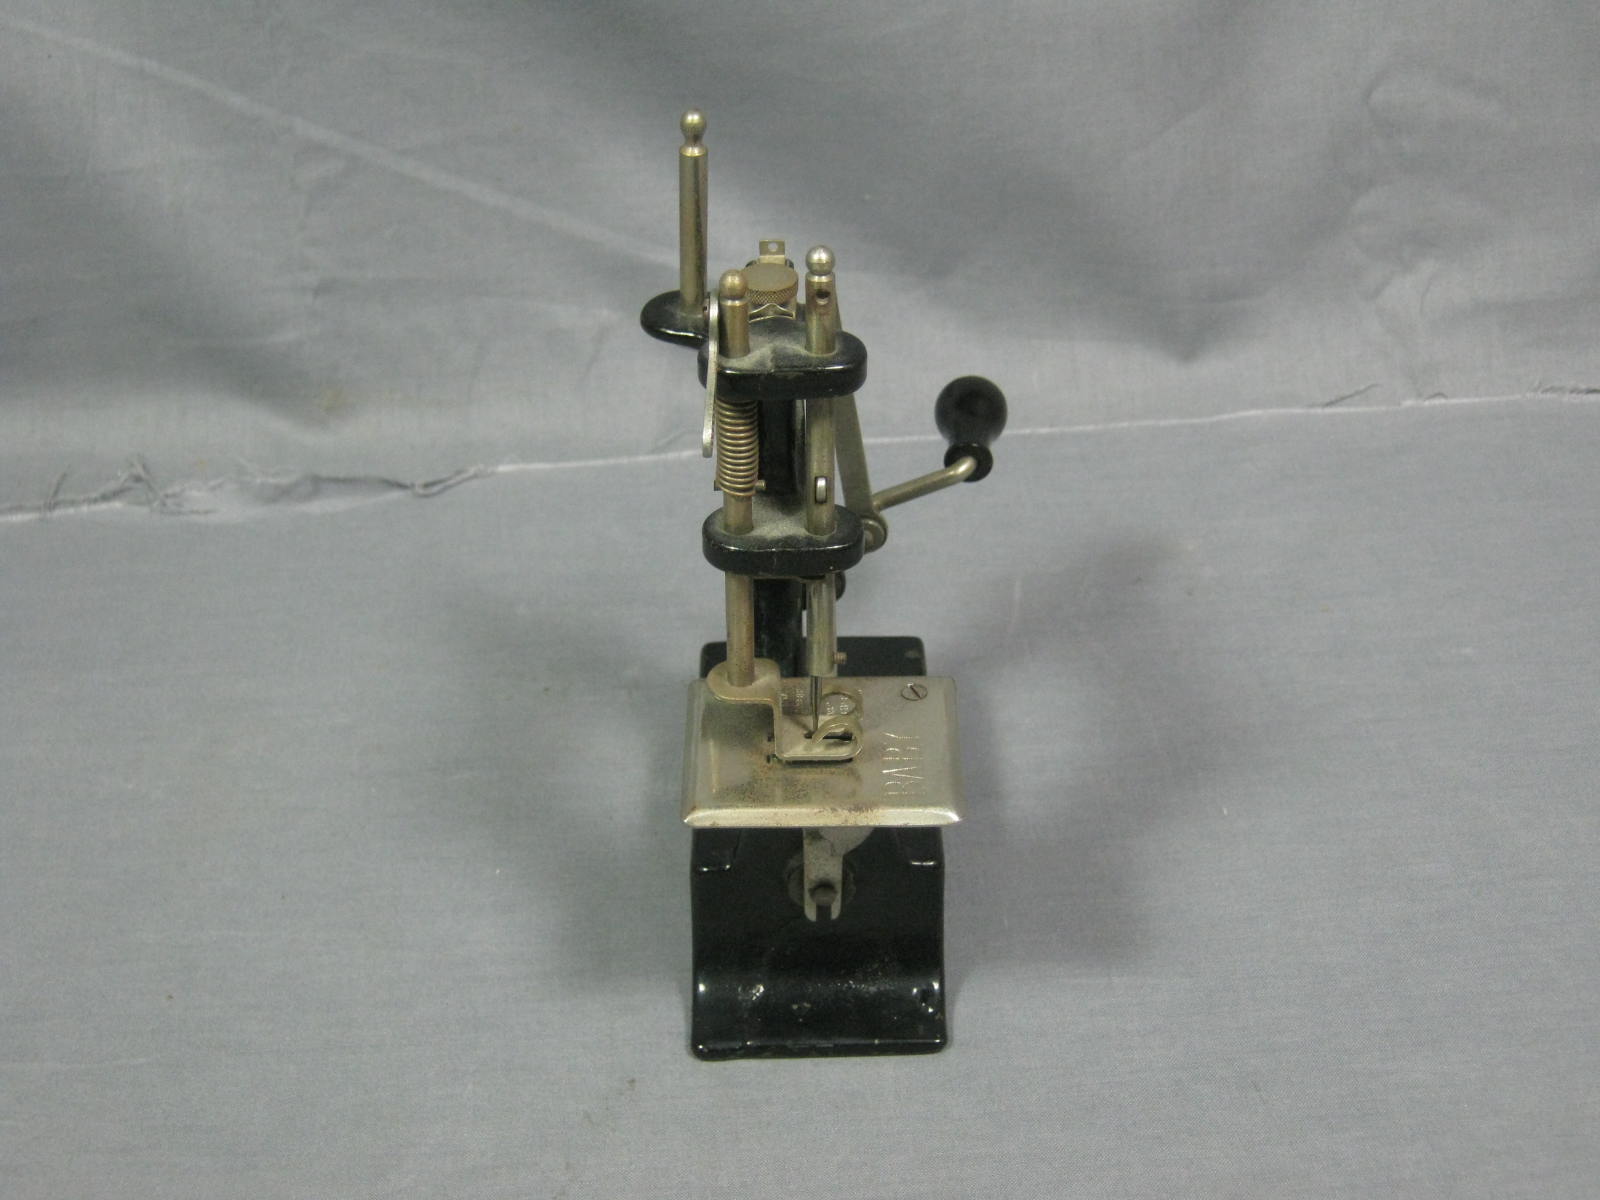 Vtg Antique Baby Hand Crank Miniature Mini Sewing Machine Pat